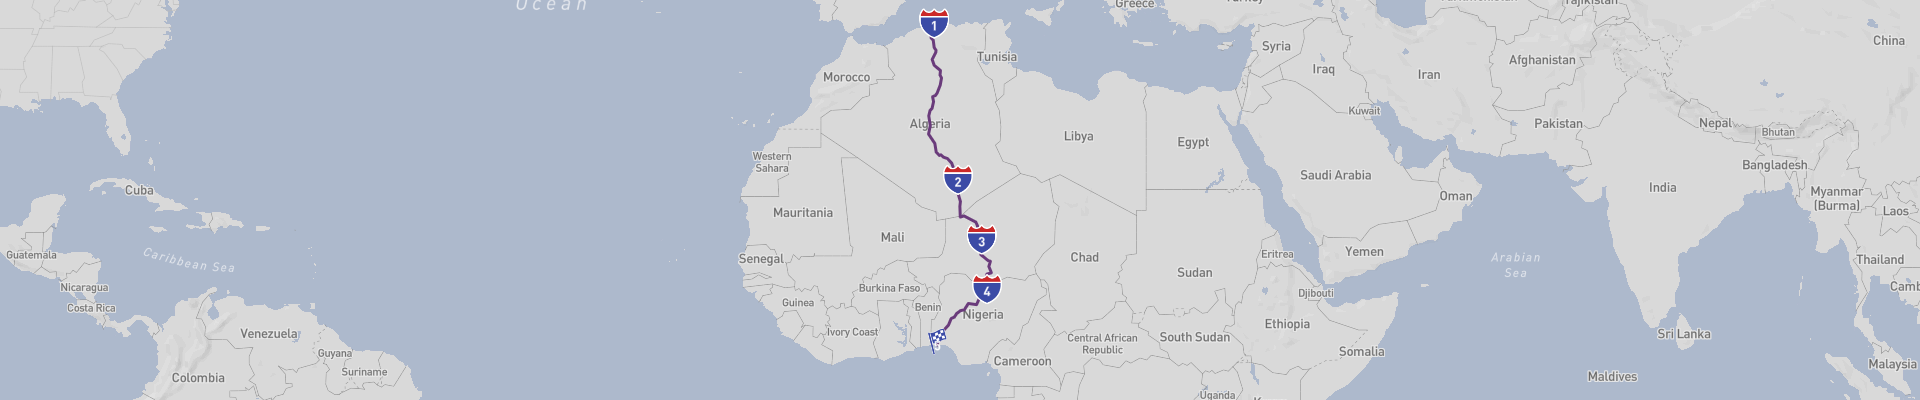 Z Algieru do Lagos Transafryka samochodem